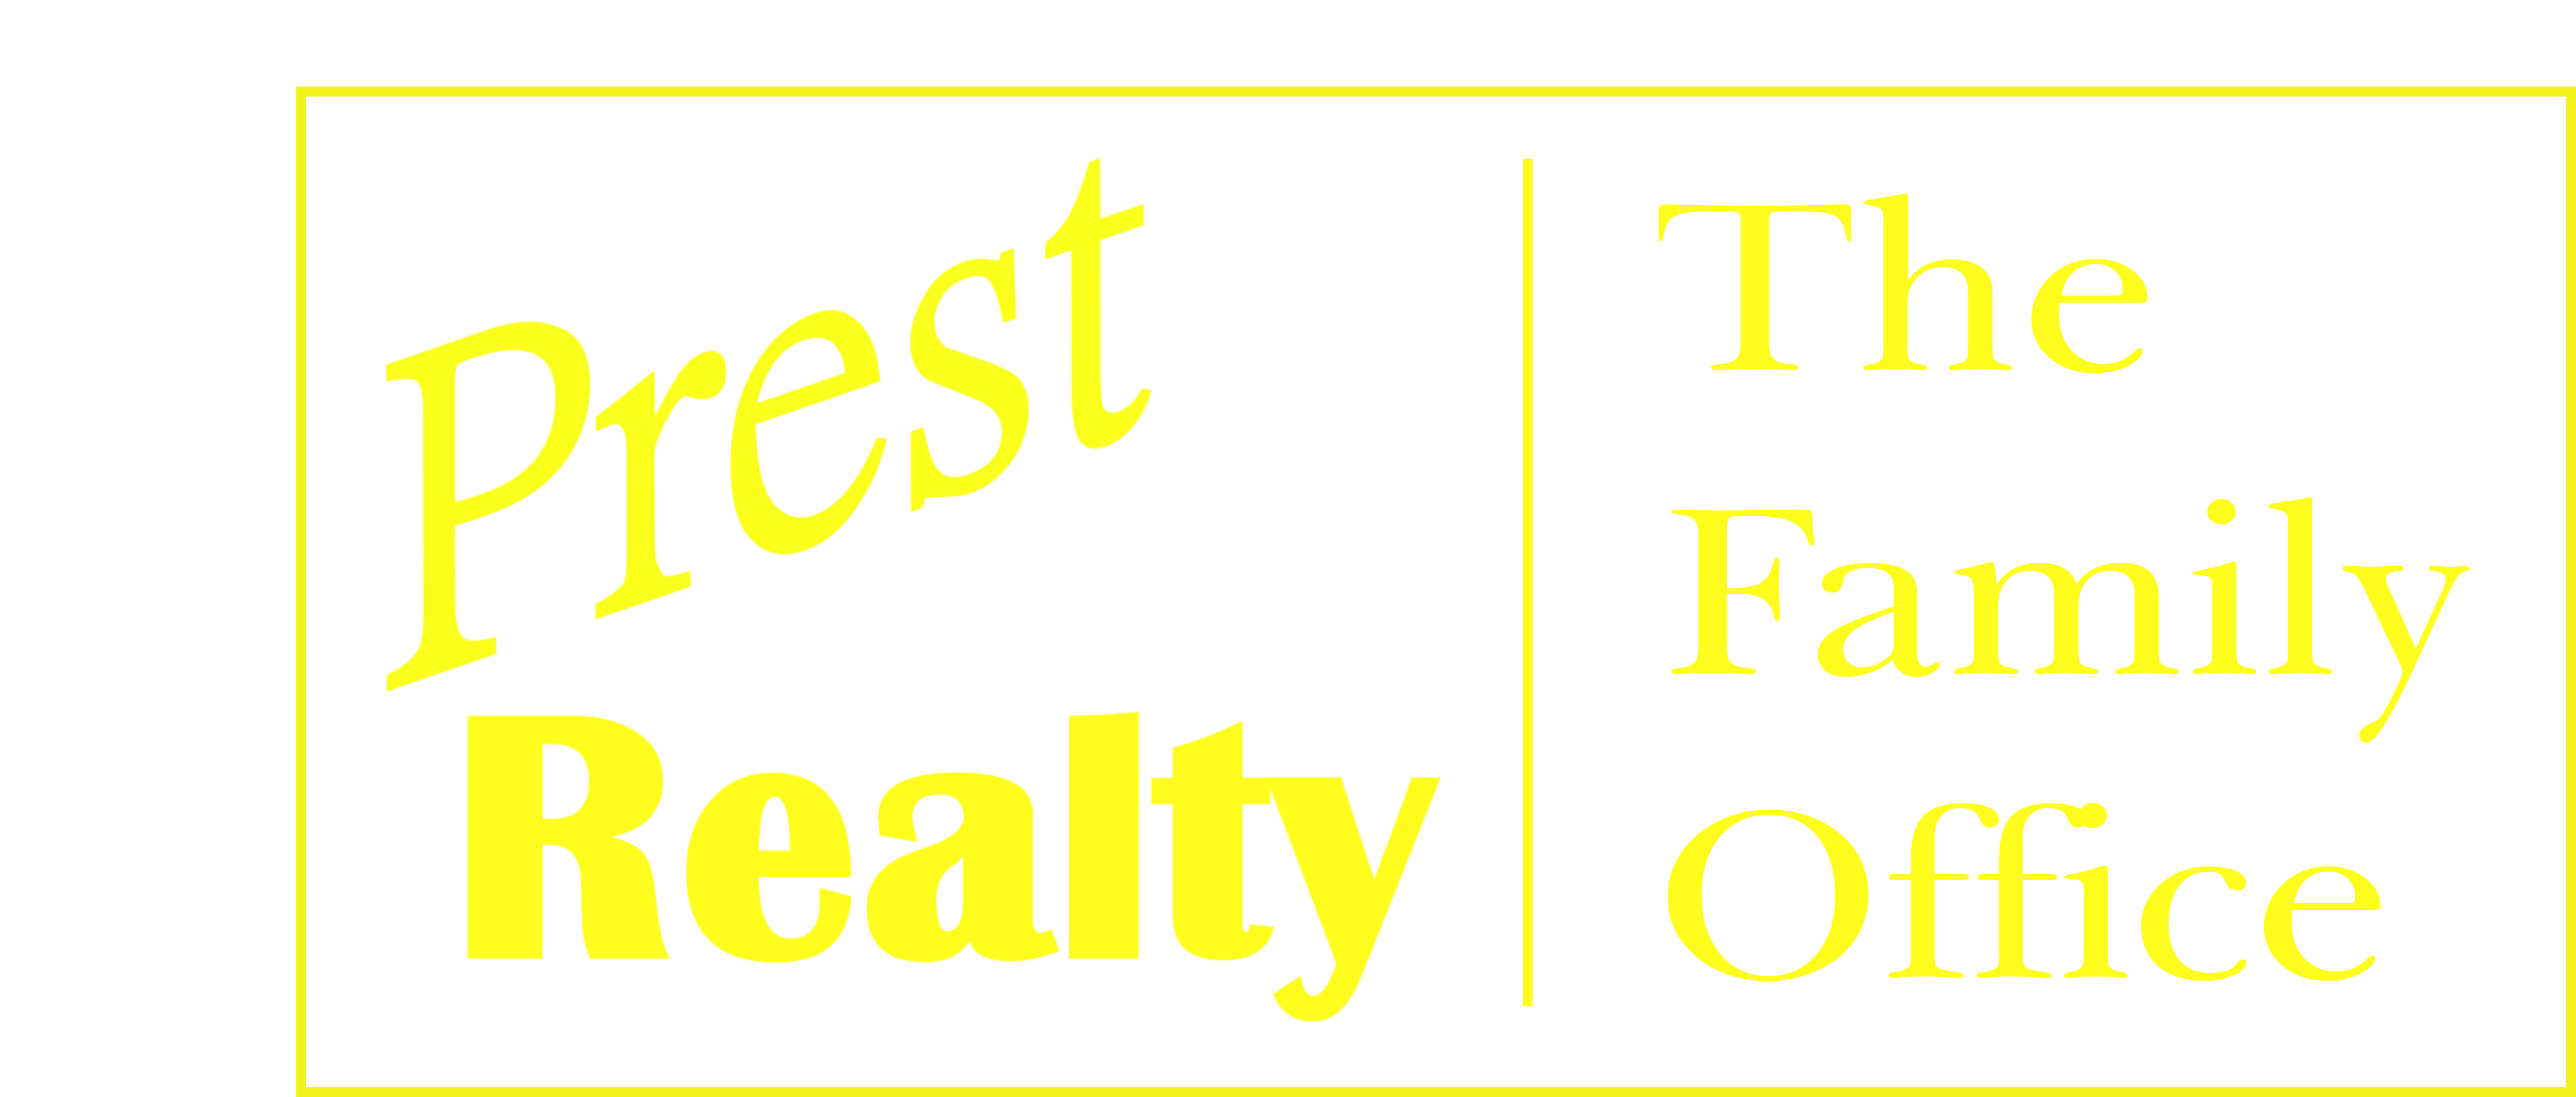 Prest Realty logo